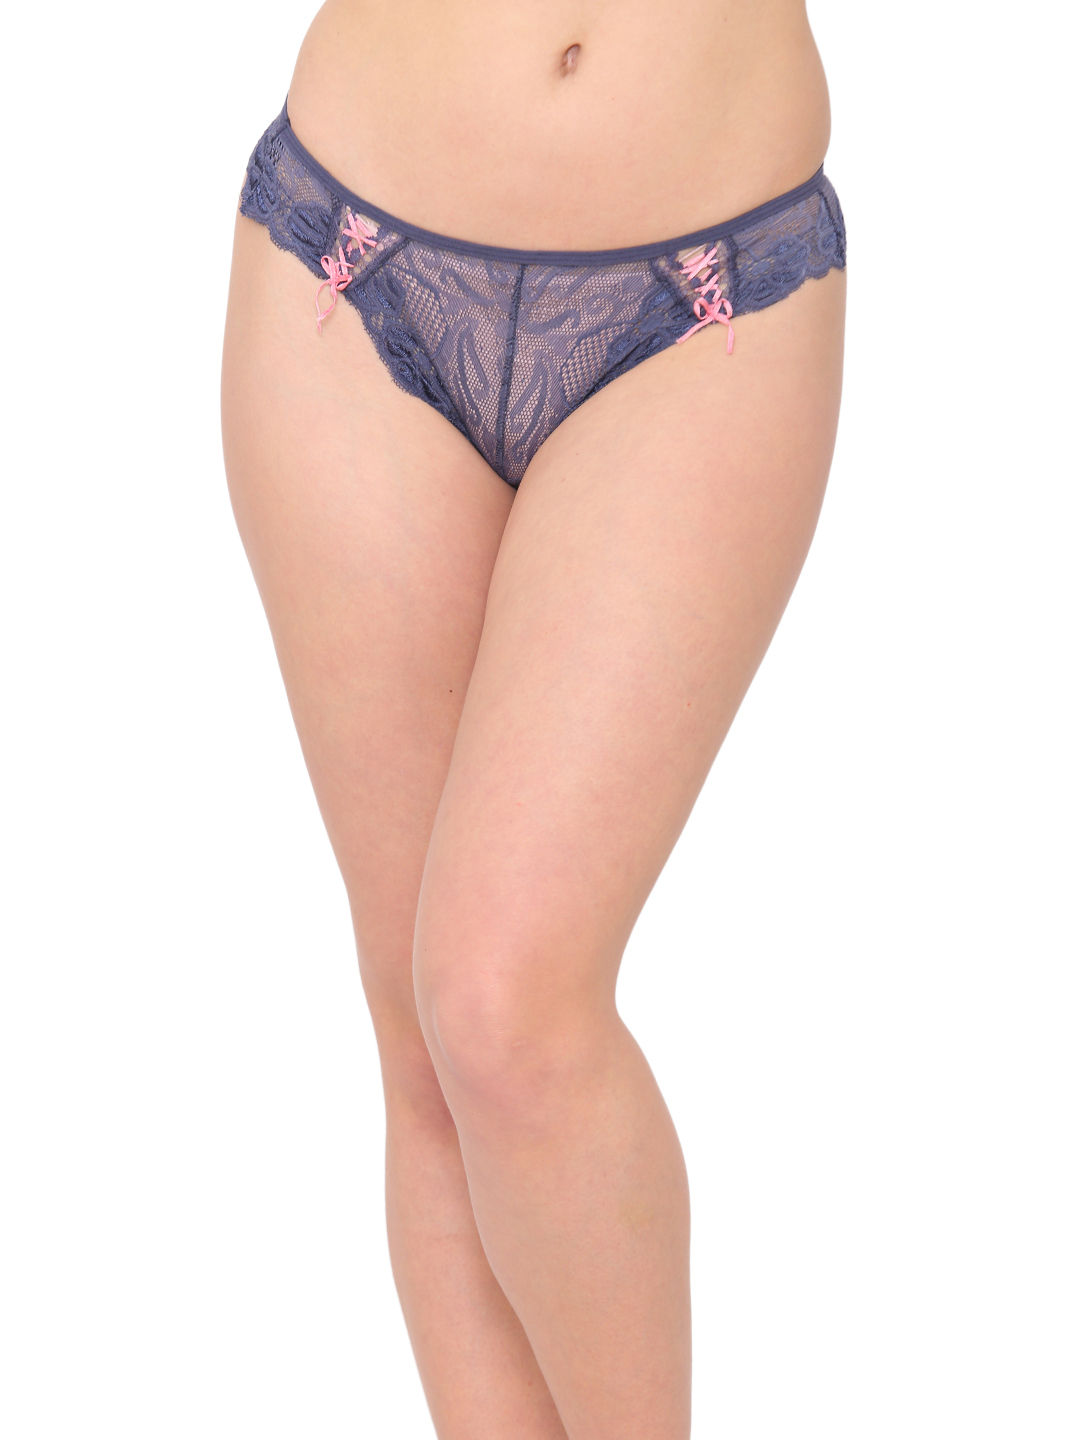 N-Gal Women'S Sheer Lace Adjustable Waist Seamless Underwear Lingerie Briefs Panty - Blue (S)